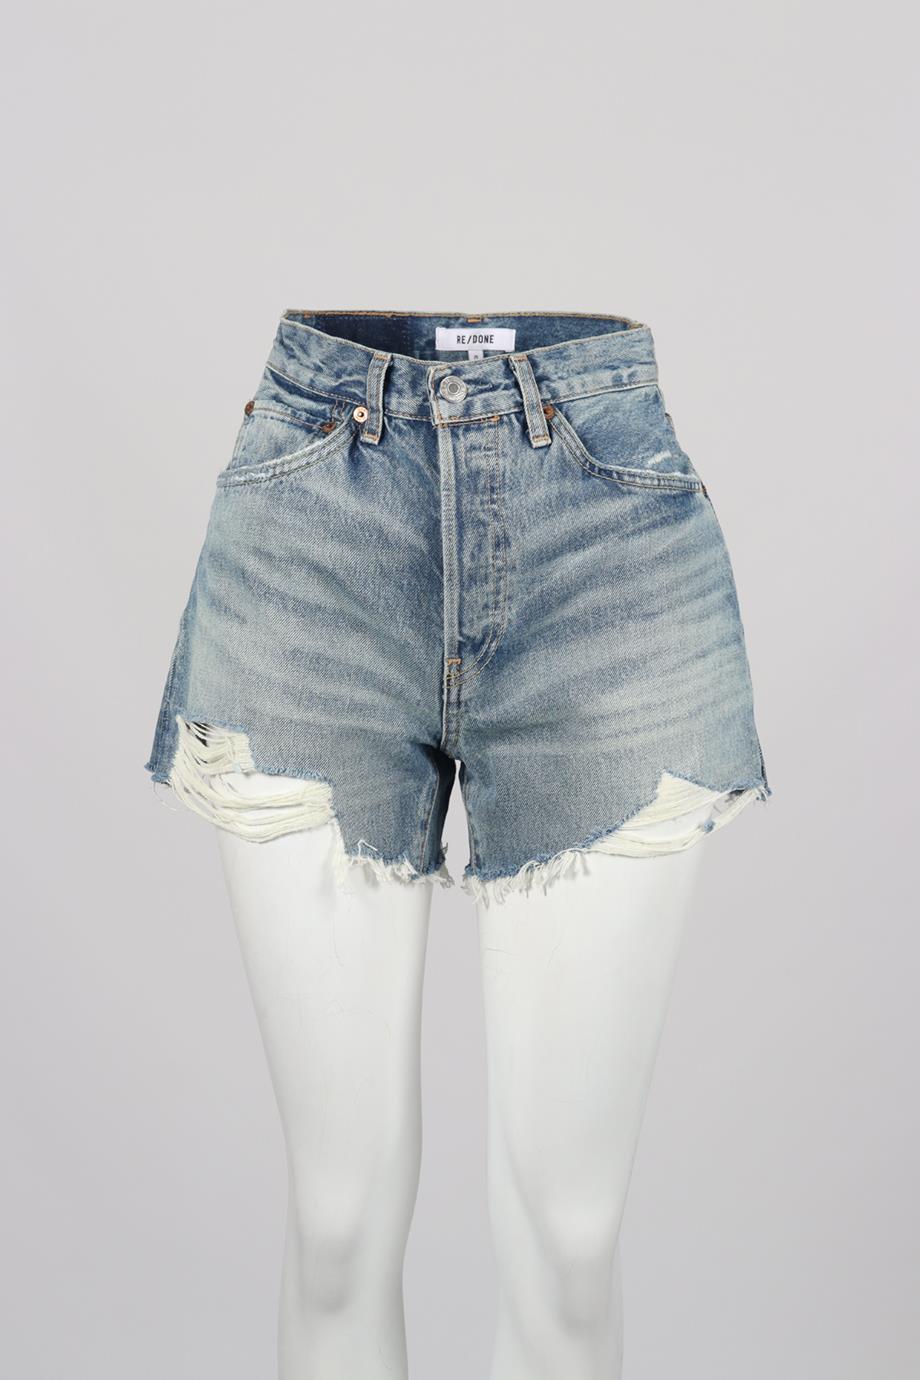 Roxy Authentic Summer High Denim Shorts Vintage Medium Blue - Womens